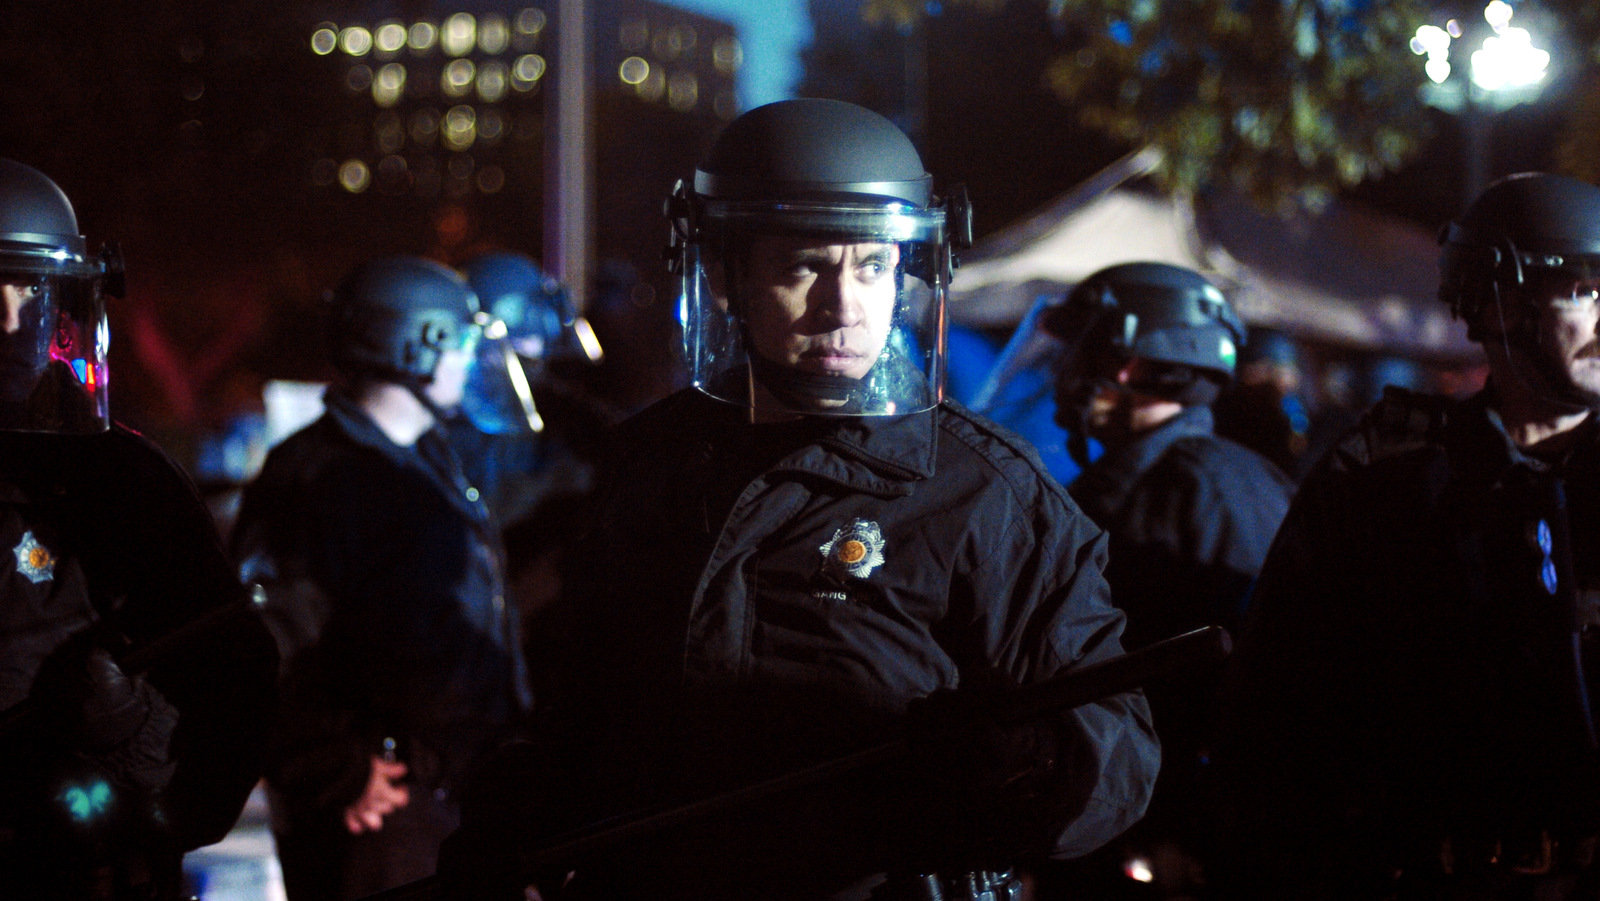 Denver riot police